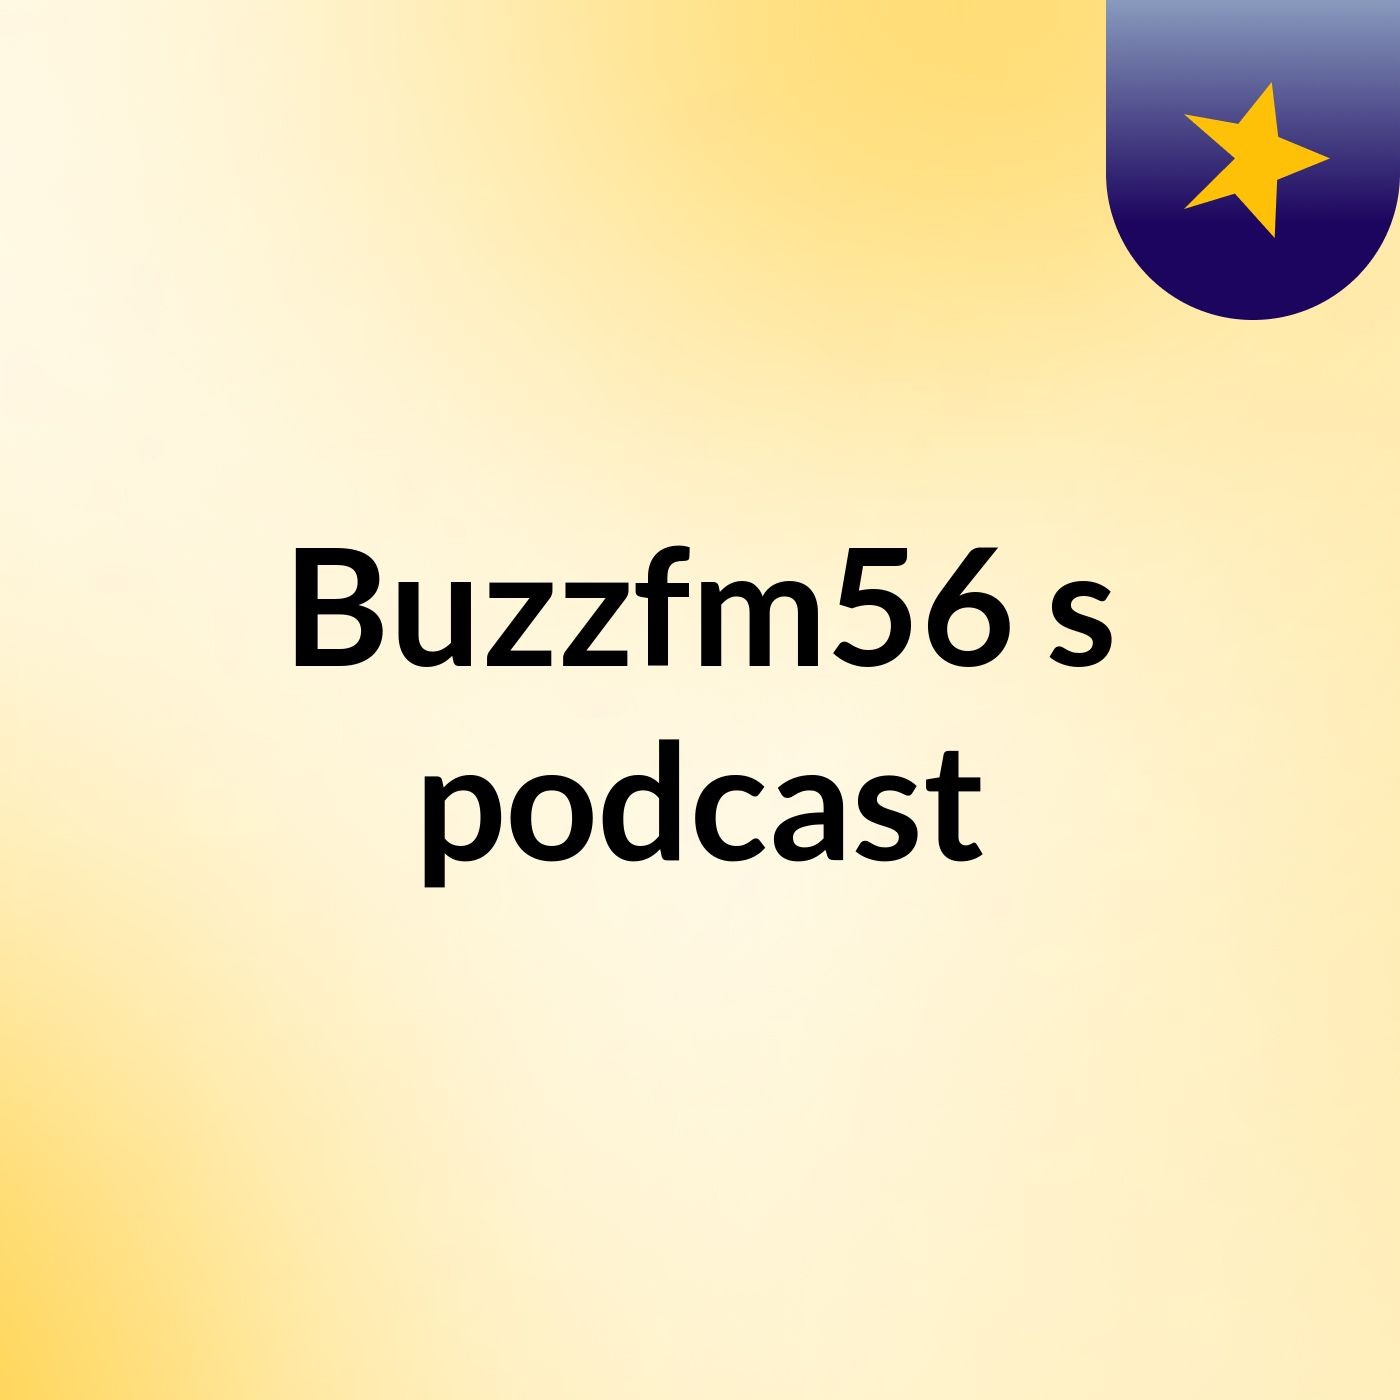 Buzzfm56's podcast